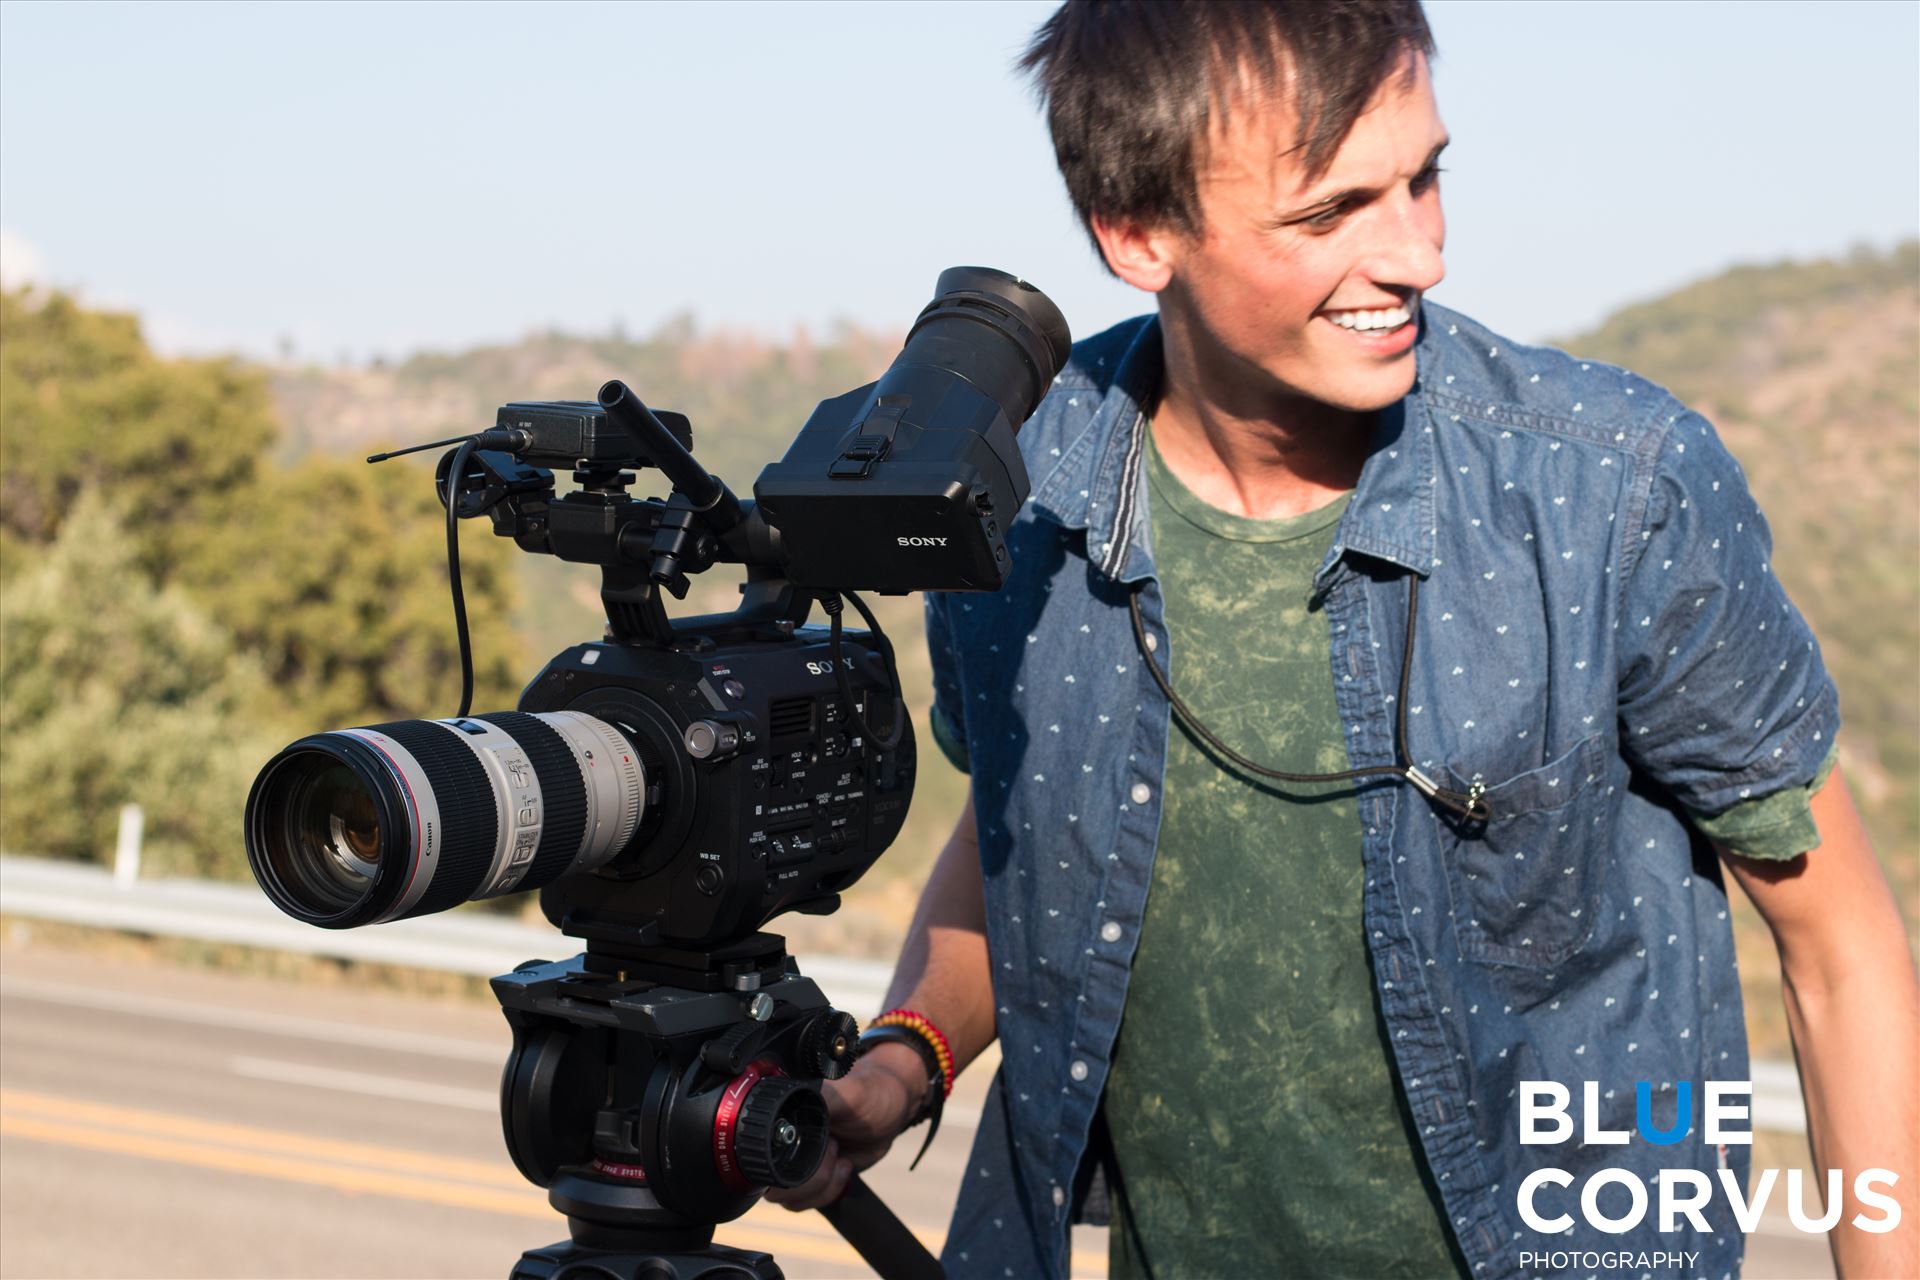 "Filming with Alec" Location: Auberry, CA by Eddie Zamora